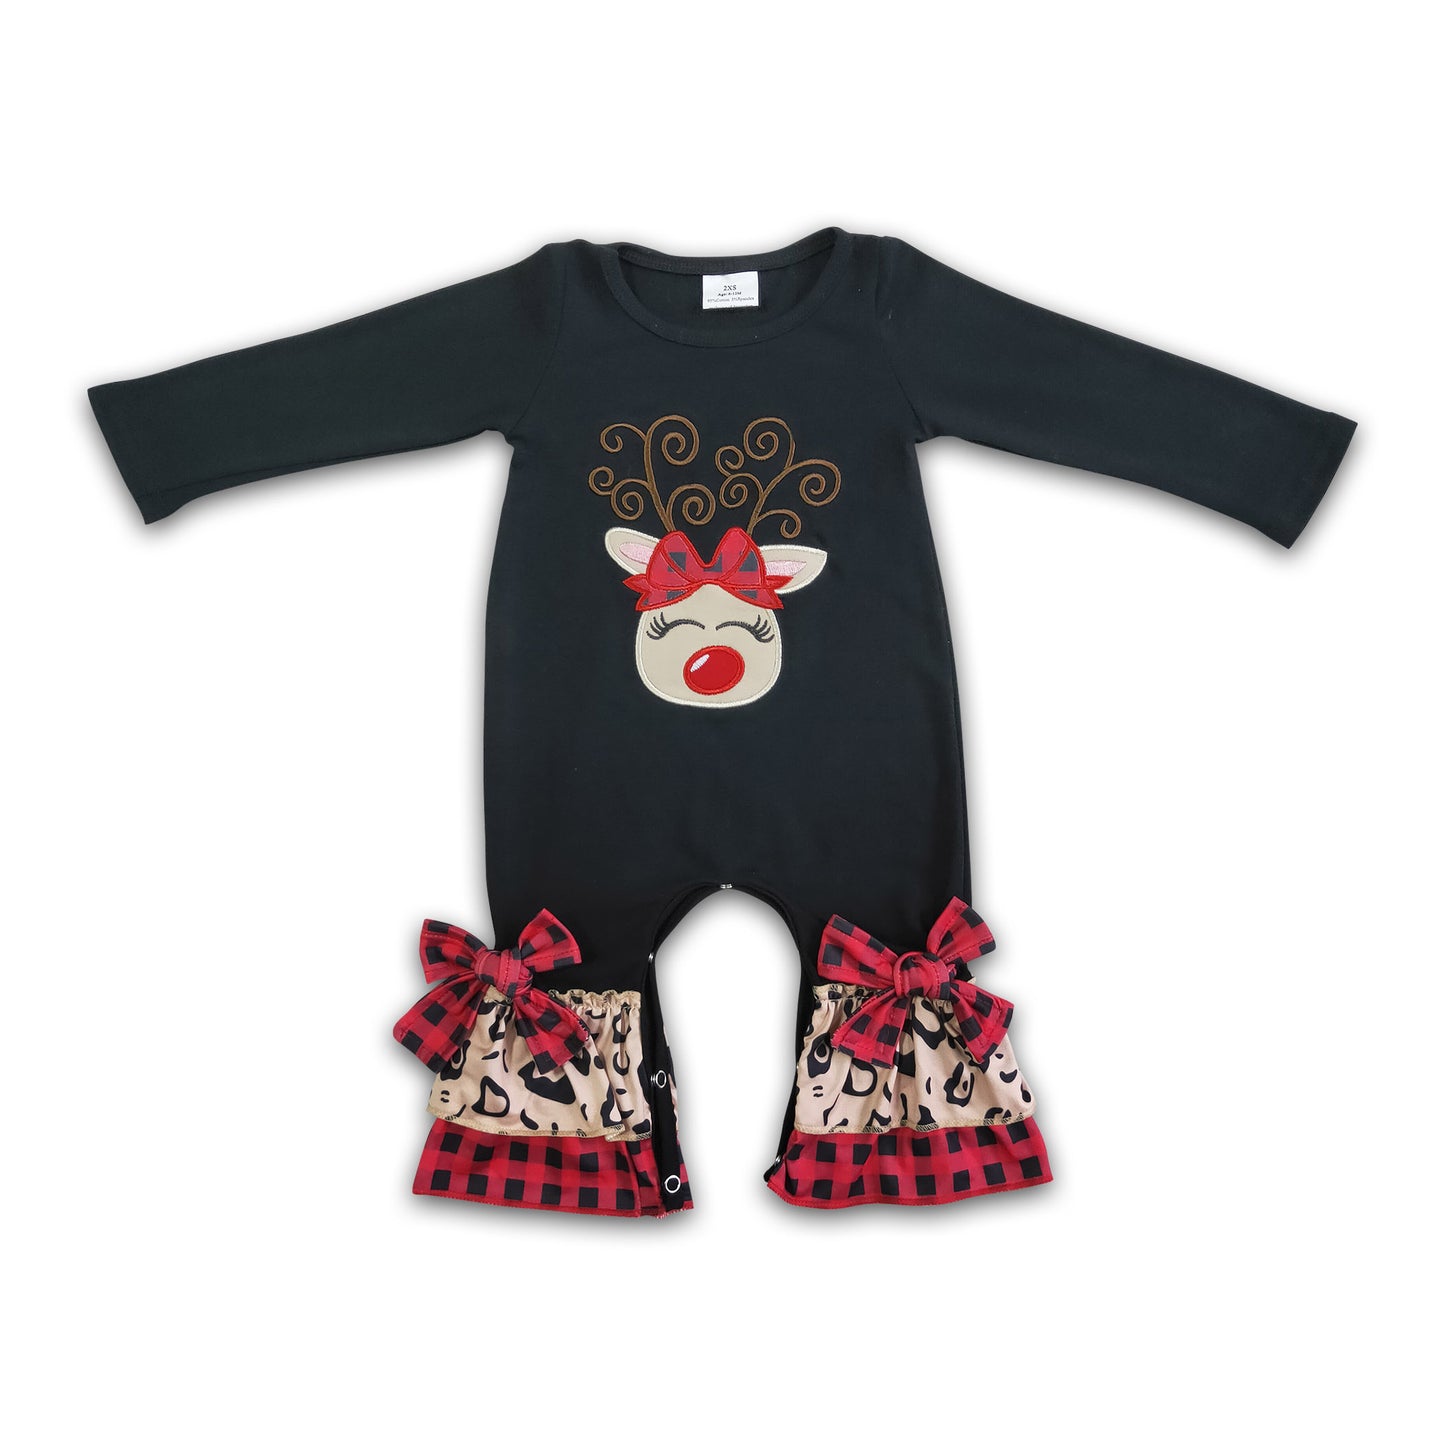 Reindeer embroidery baby Christmas romper